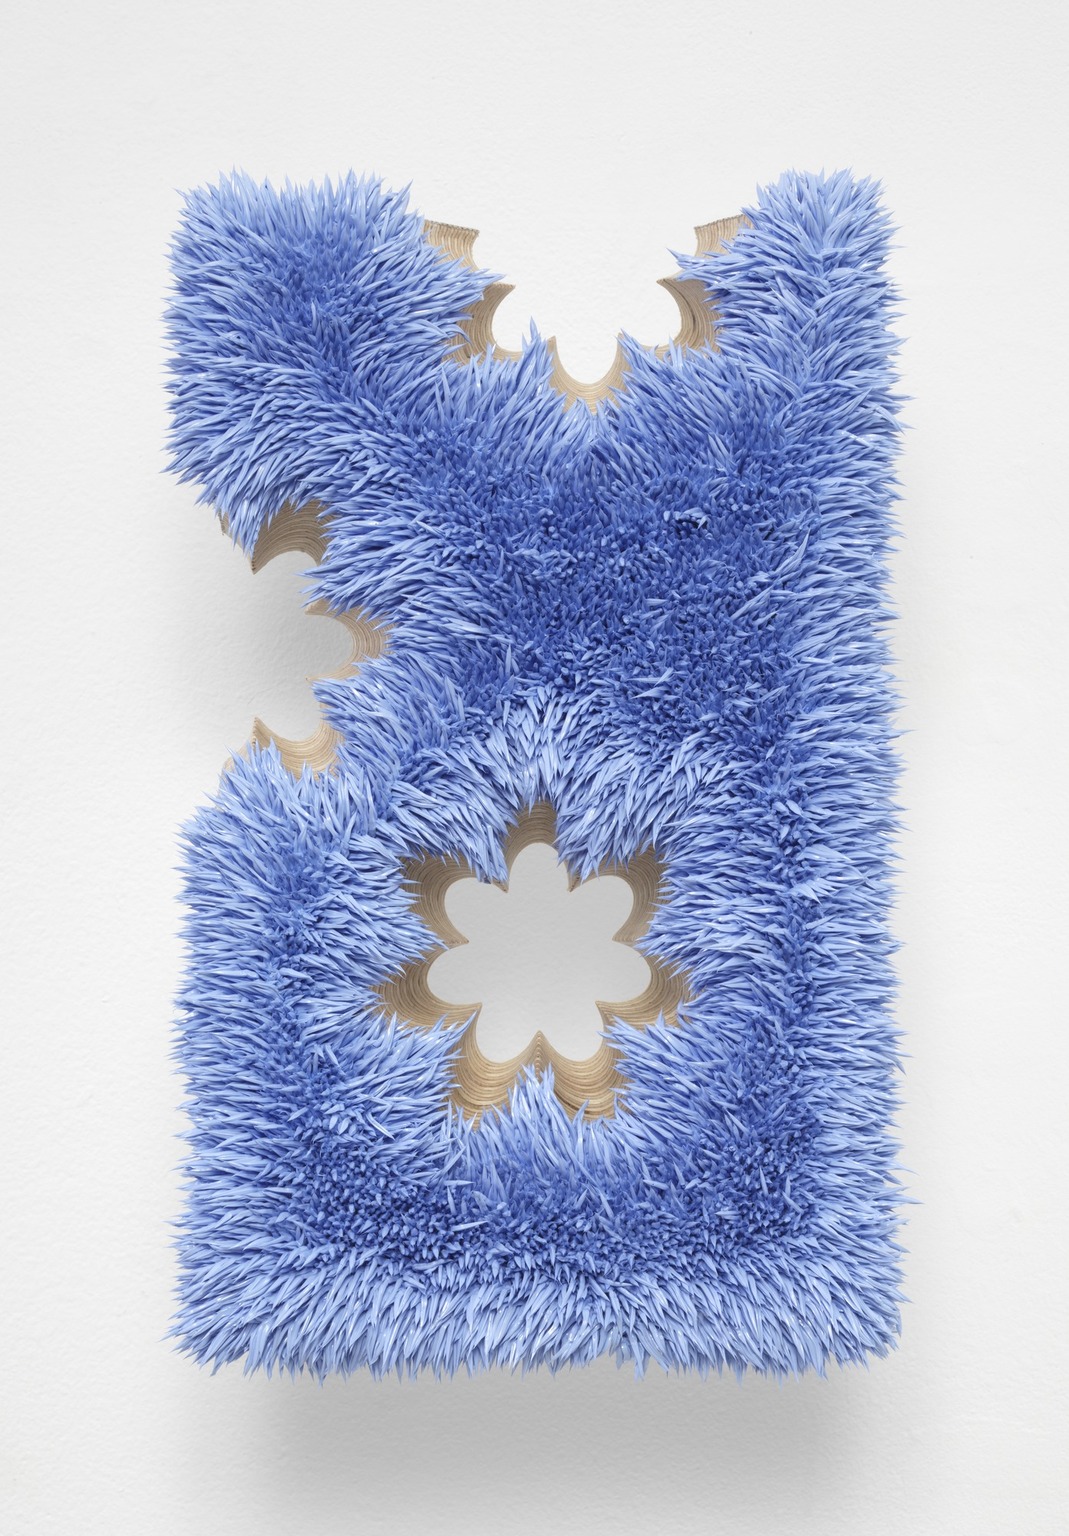 Lot 043017 (Multiflora, Radiant Blue) by Donald Moffett